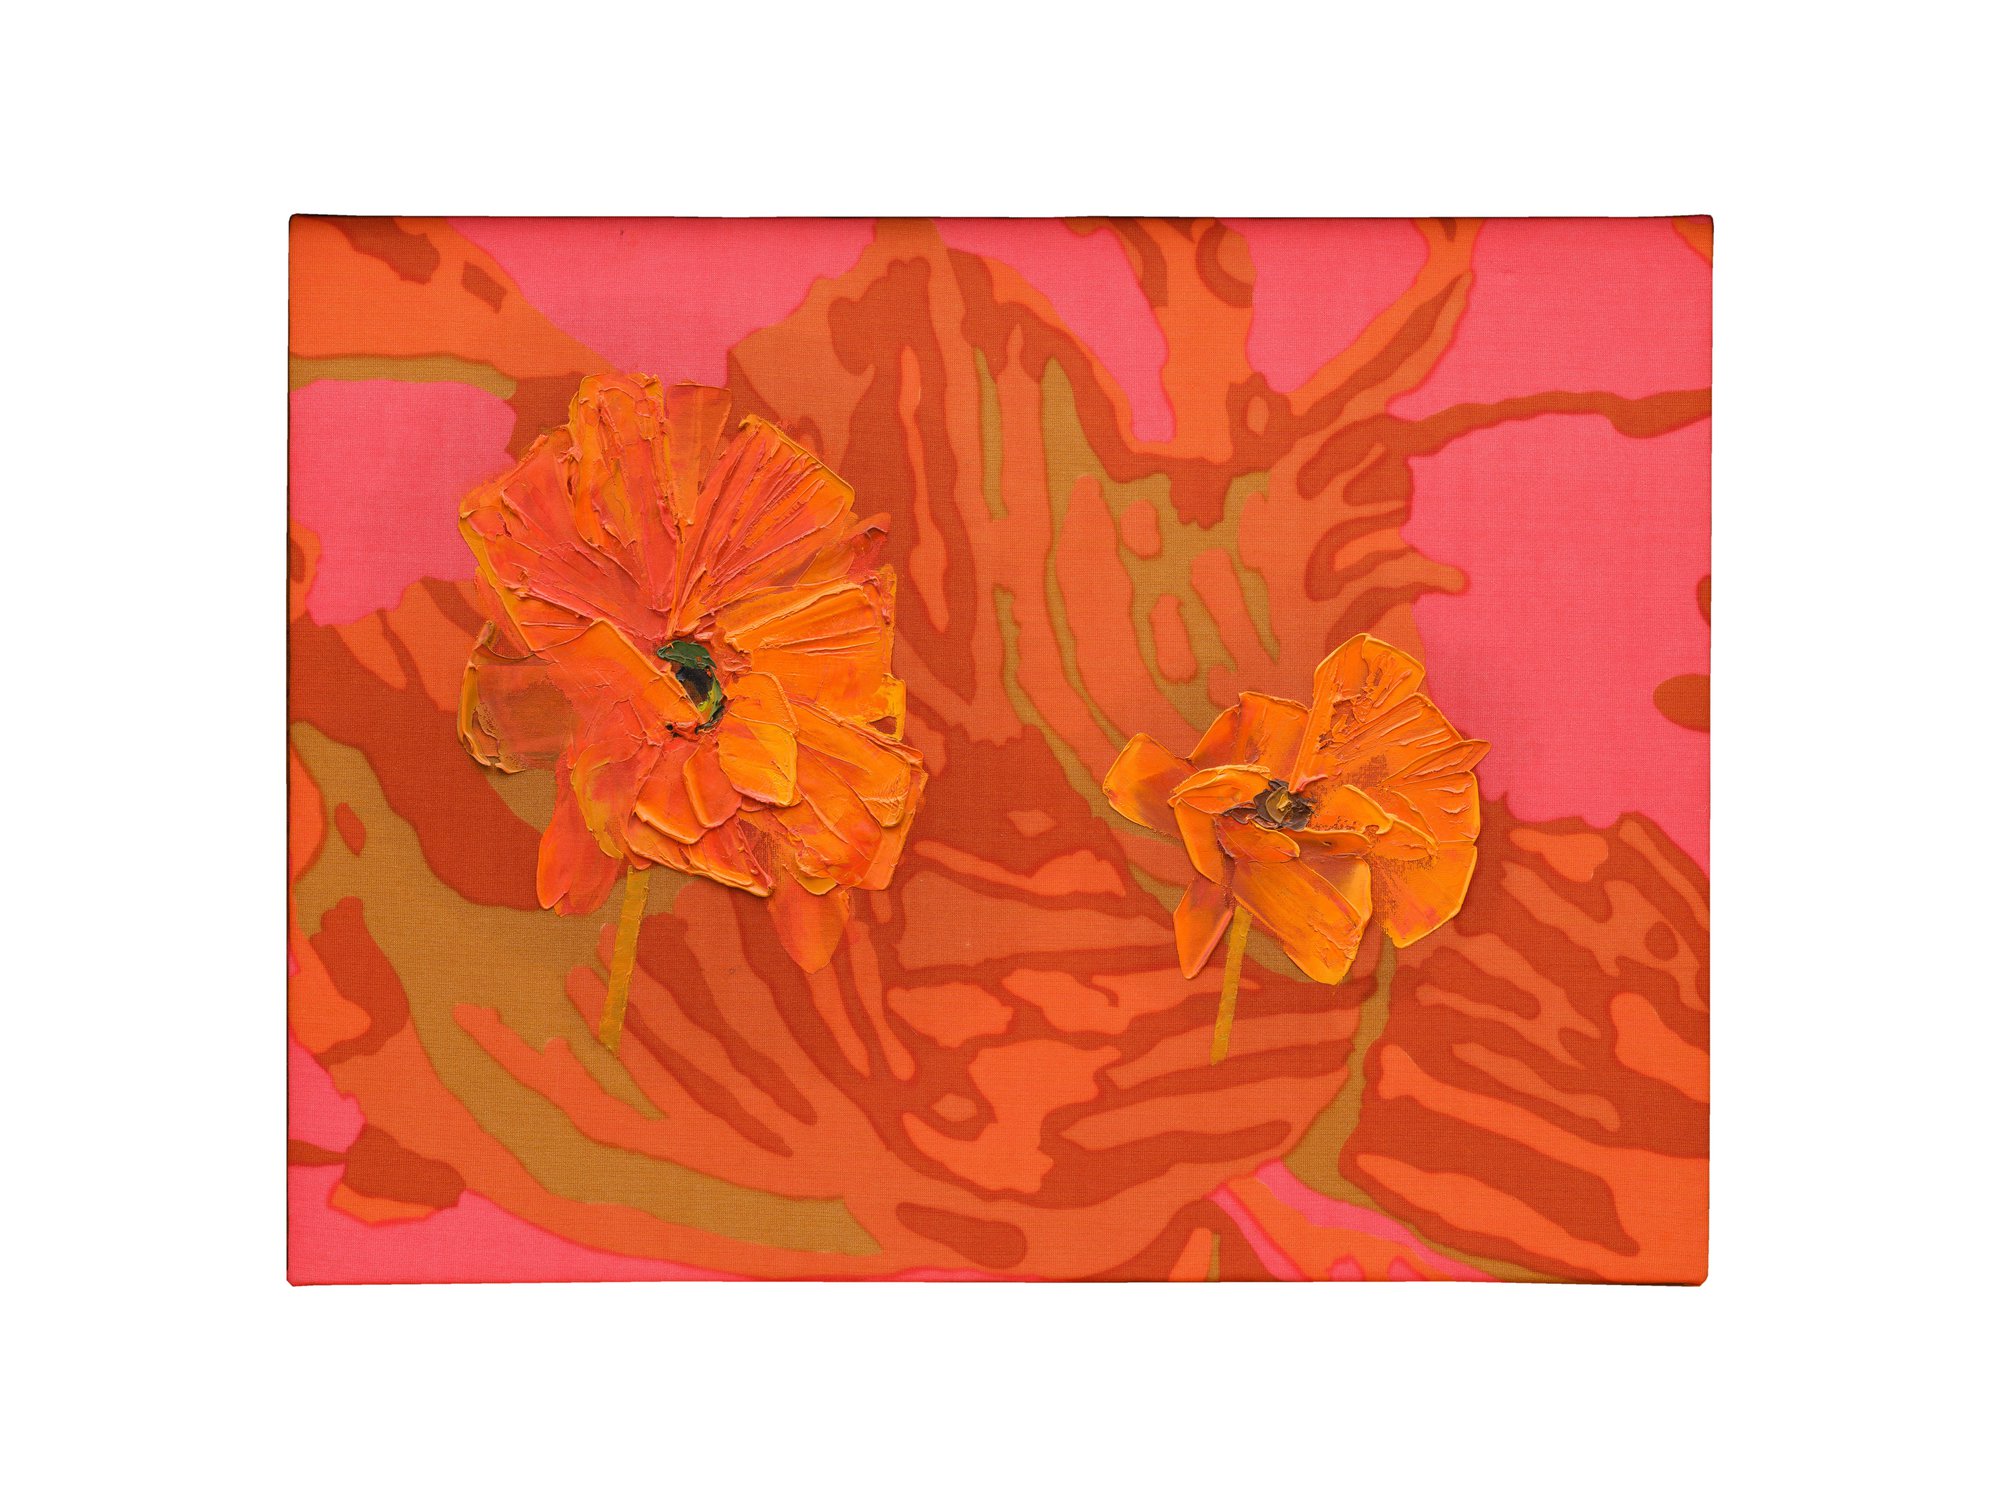 Bernat Klein, Orange Oriental Poppies II, oil on screen printed knitted jersey polyester (Diolen), 46 x 61 cm (18 1/8 x 24 in), 1996